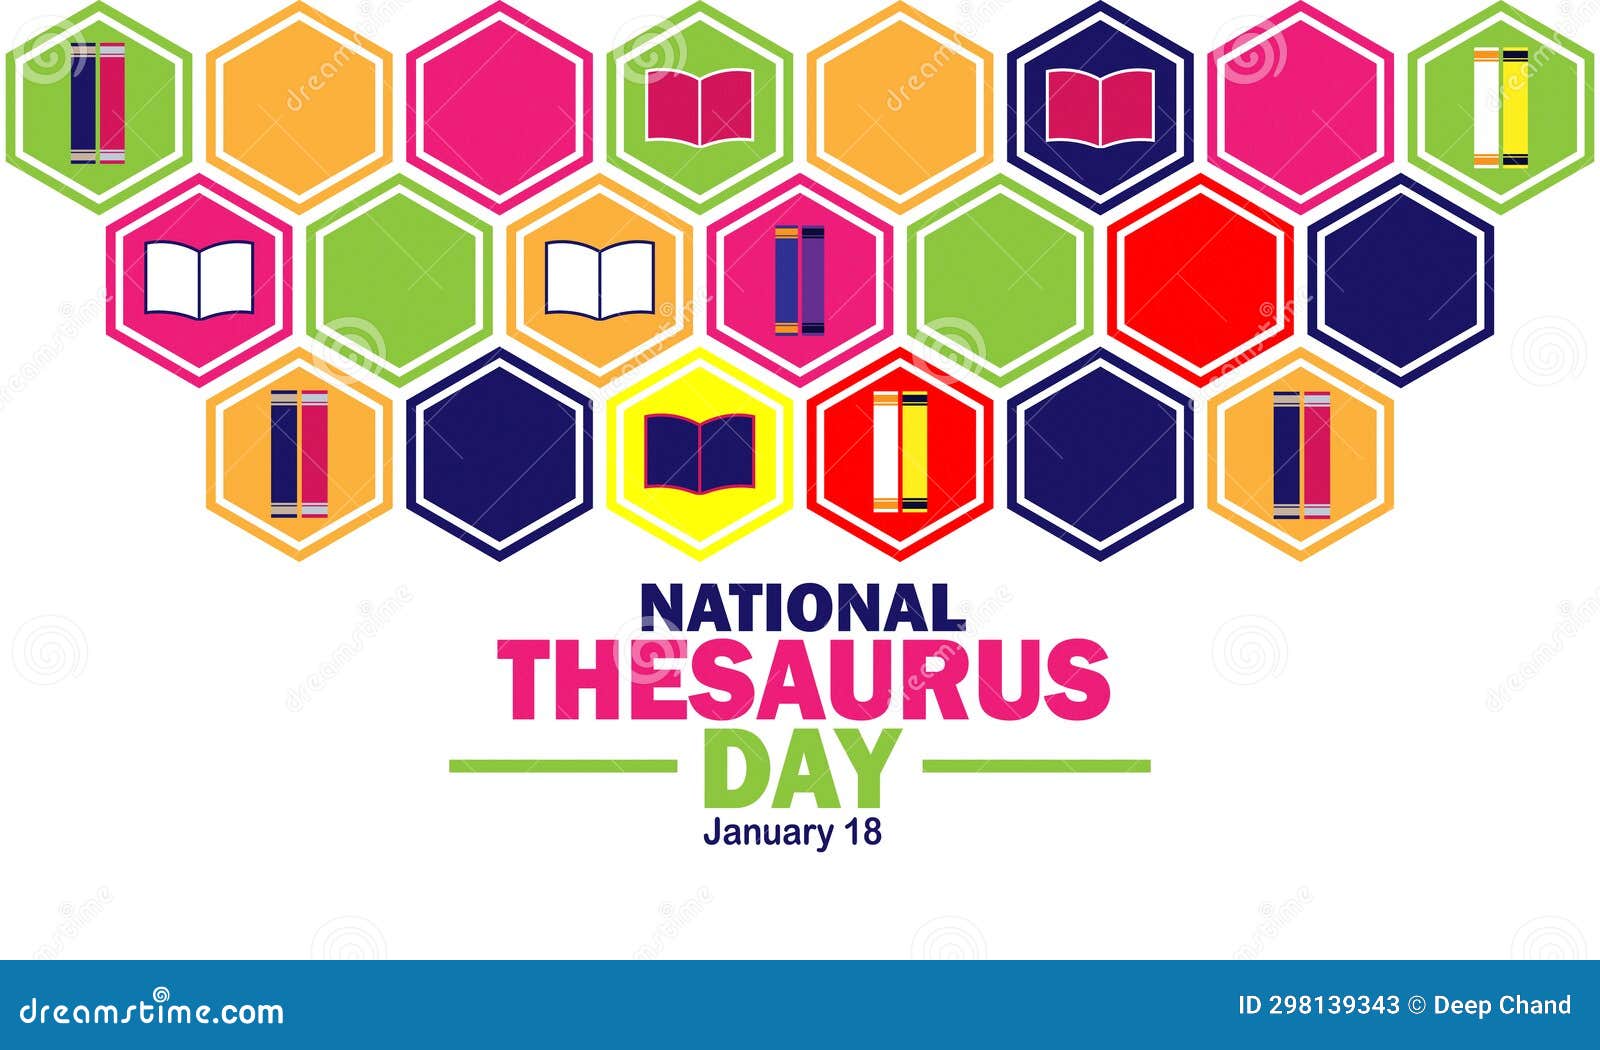 national thesaurus day